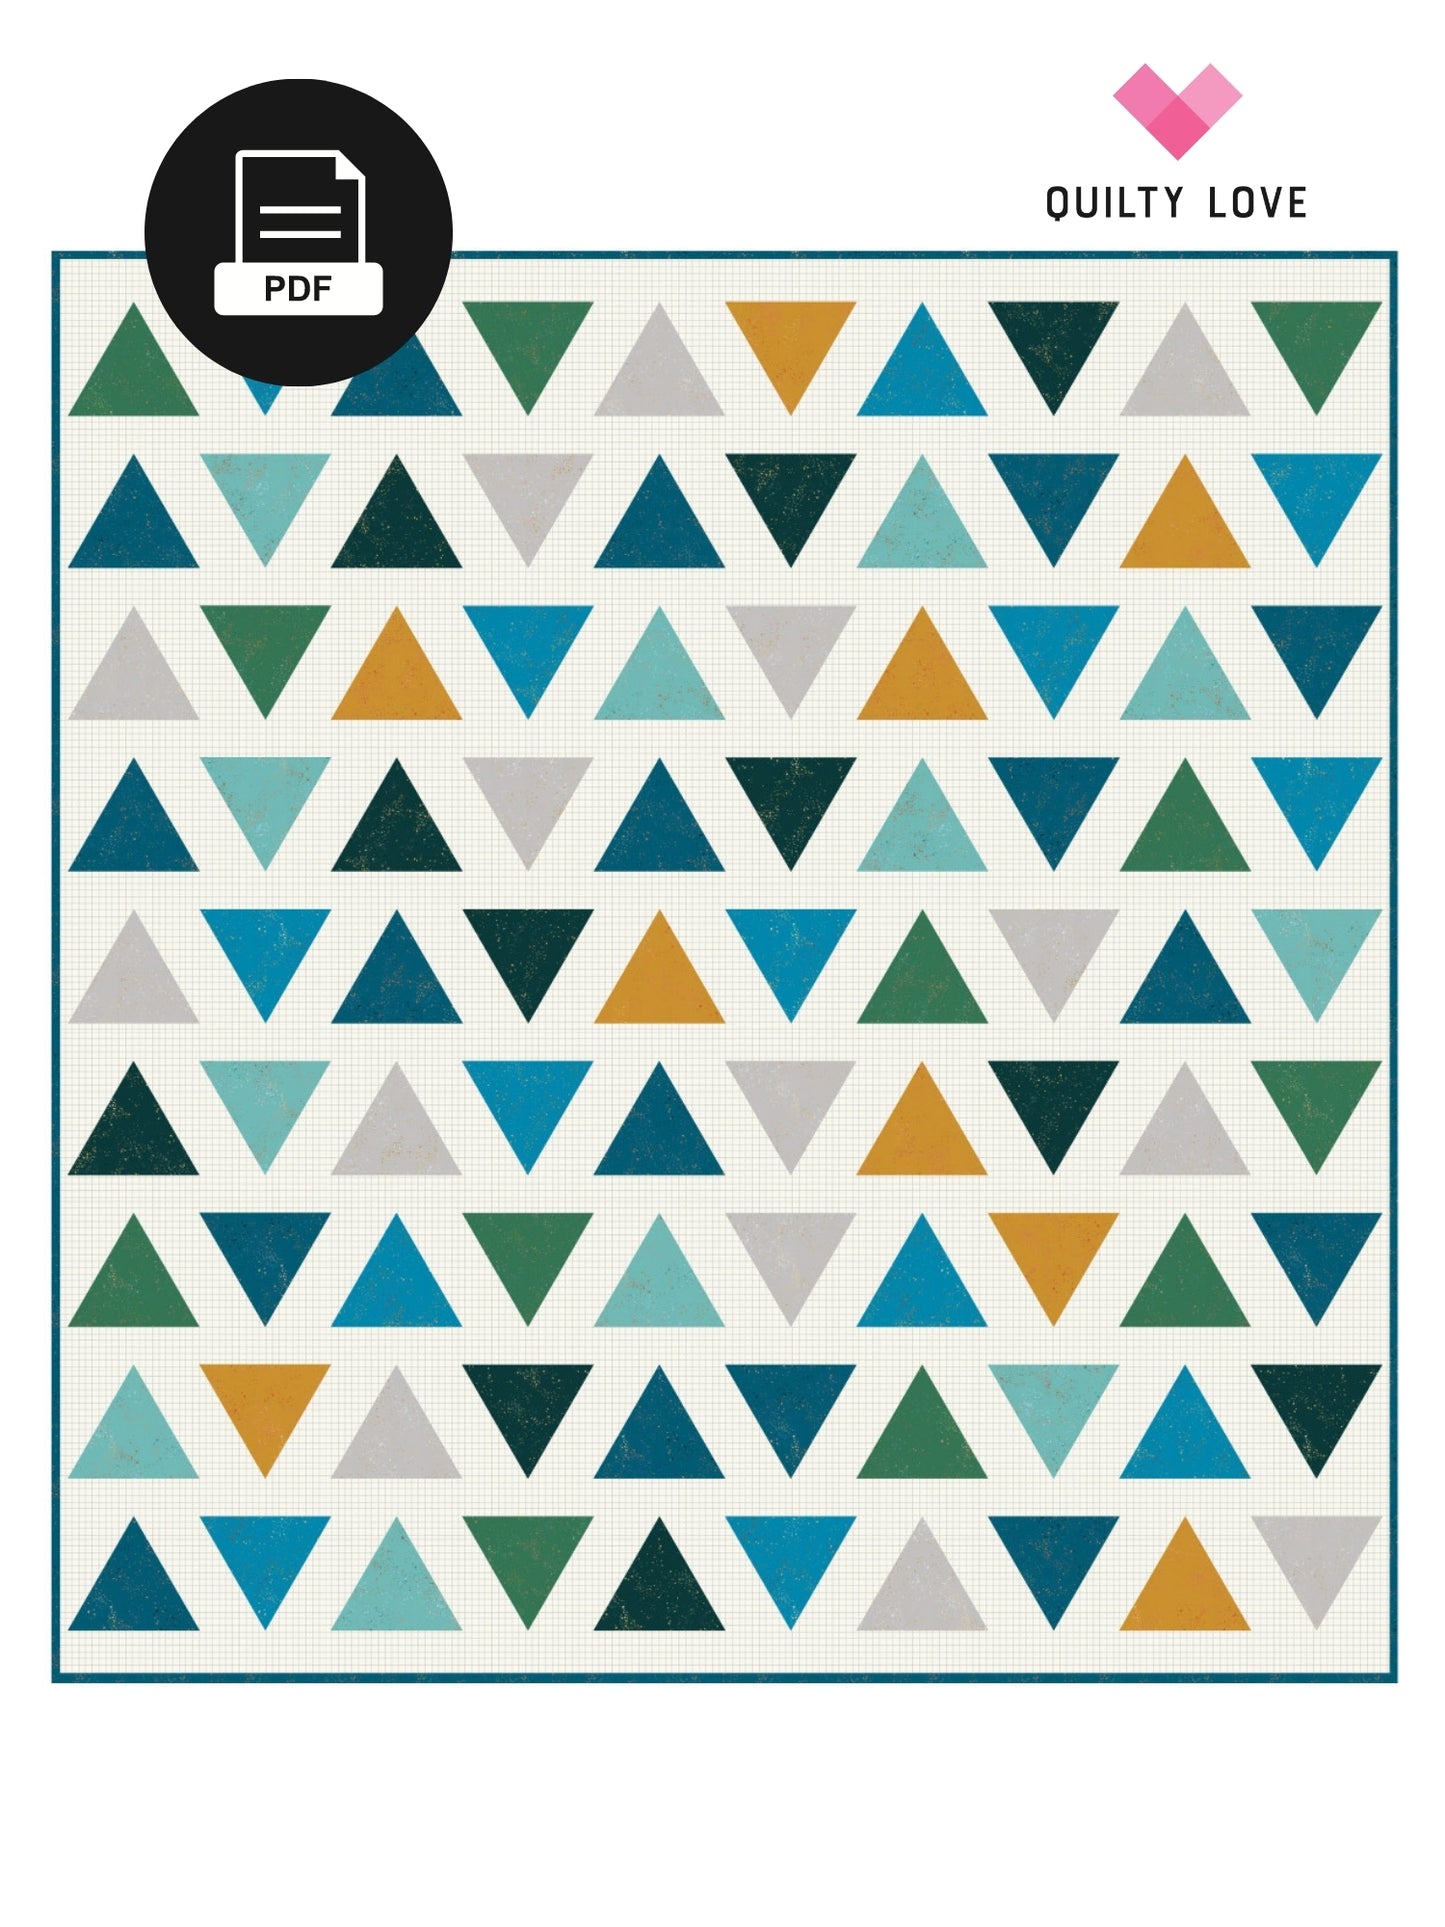 Triangle Pop PDF quilt pattern